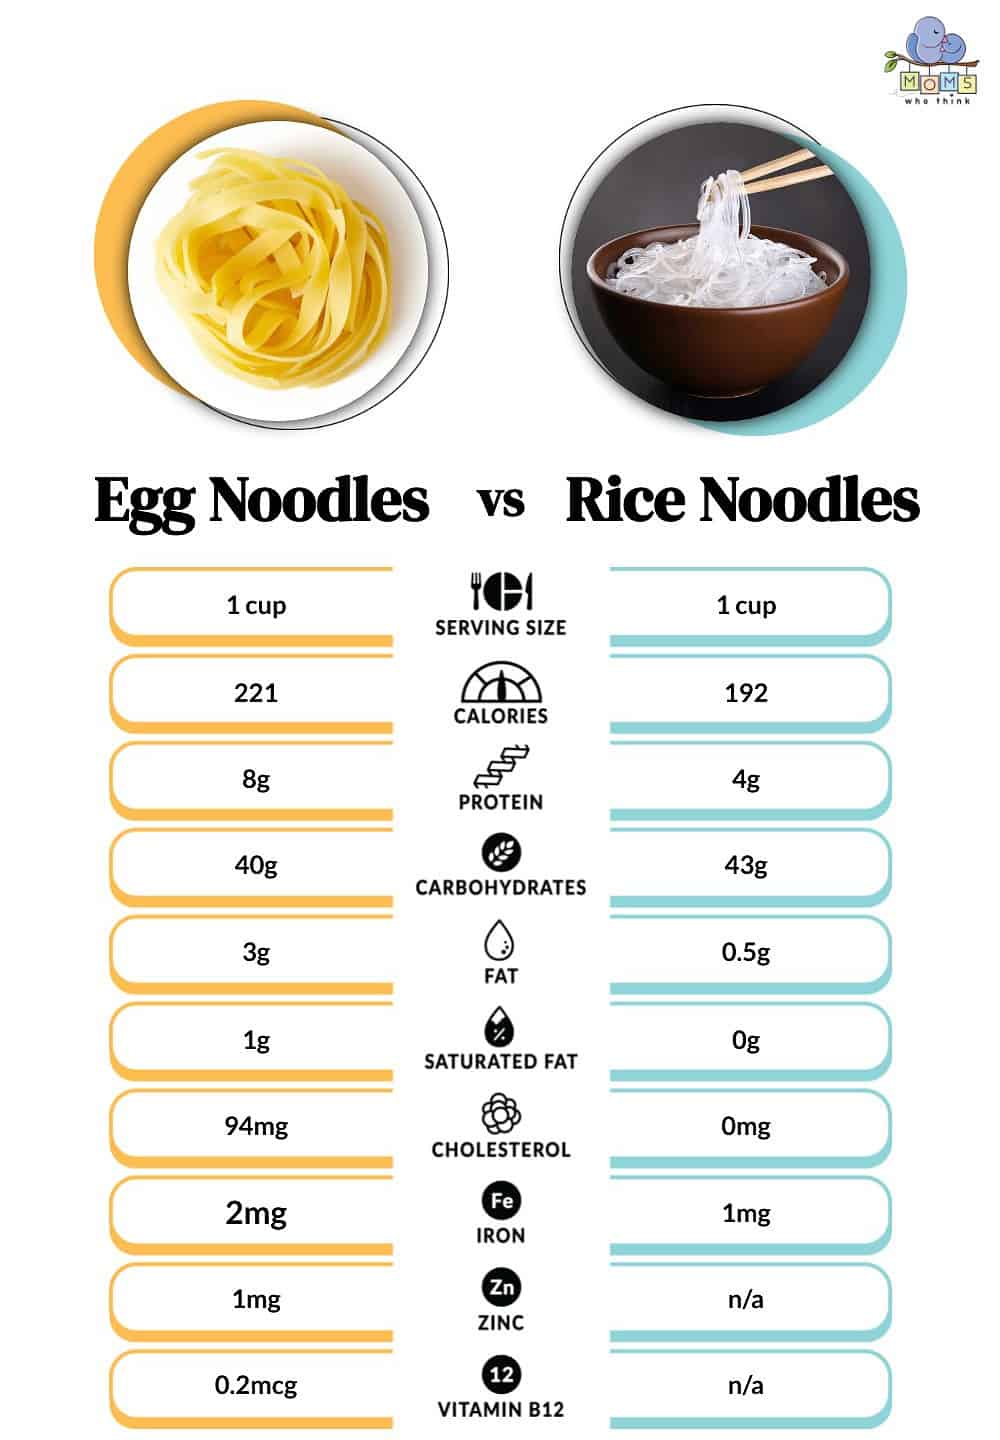 Egg Noodles vs Rice Noodles Nutritional Facts